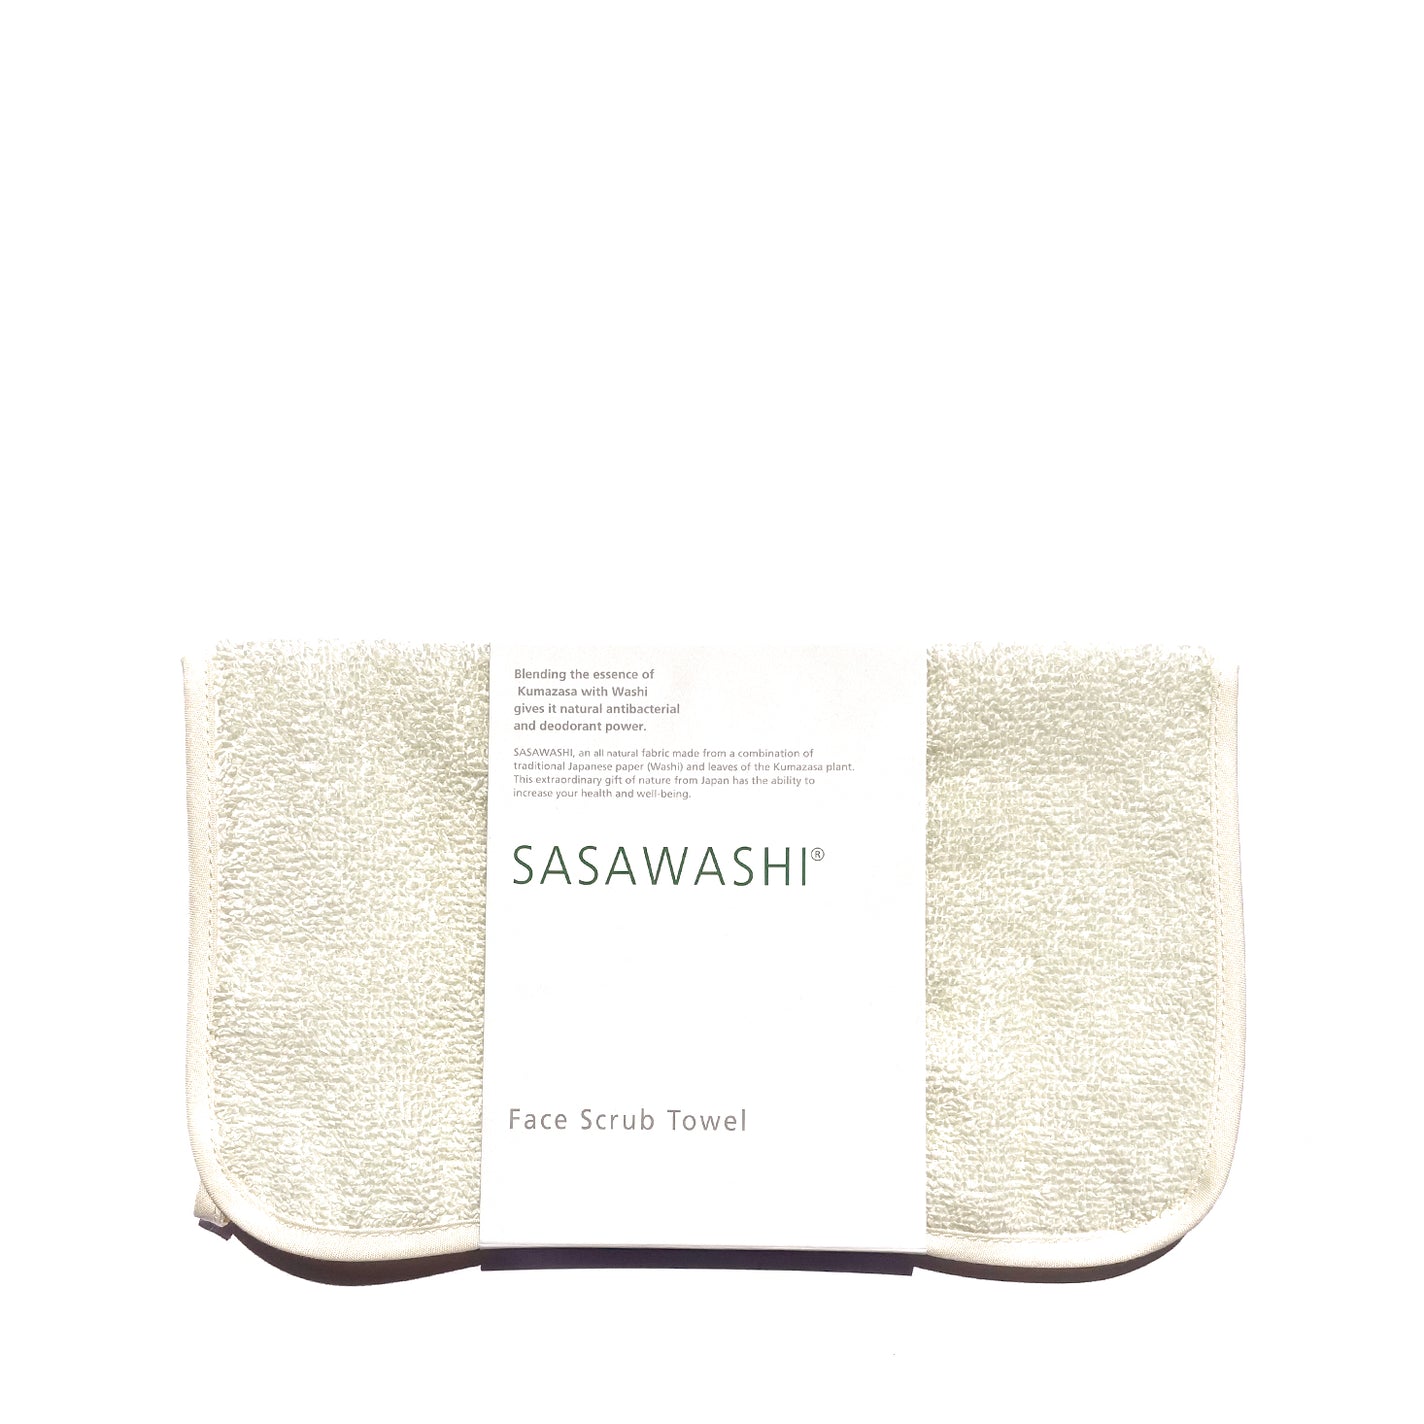 Sasawashi Face Scrub Towel